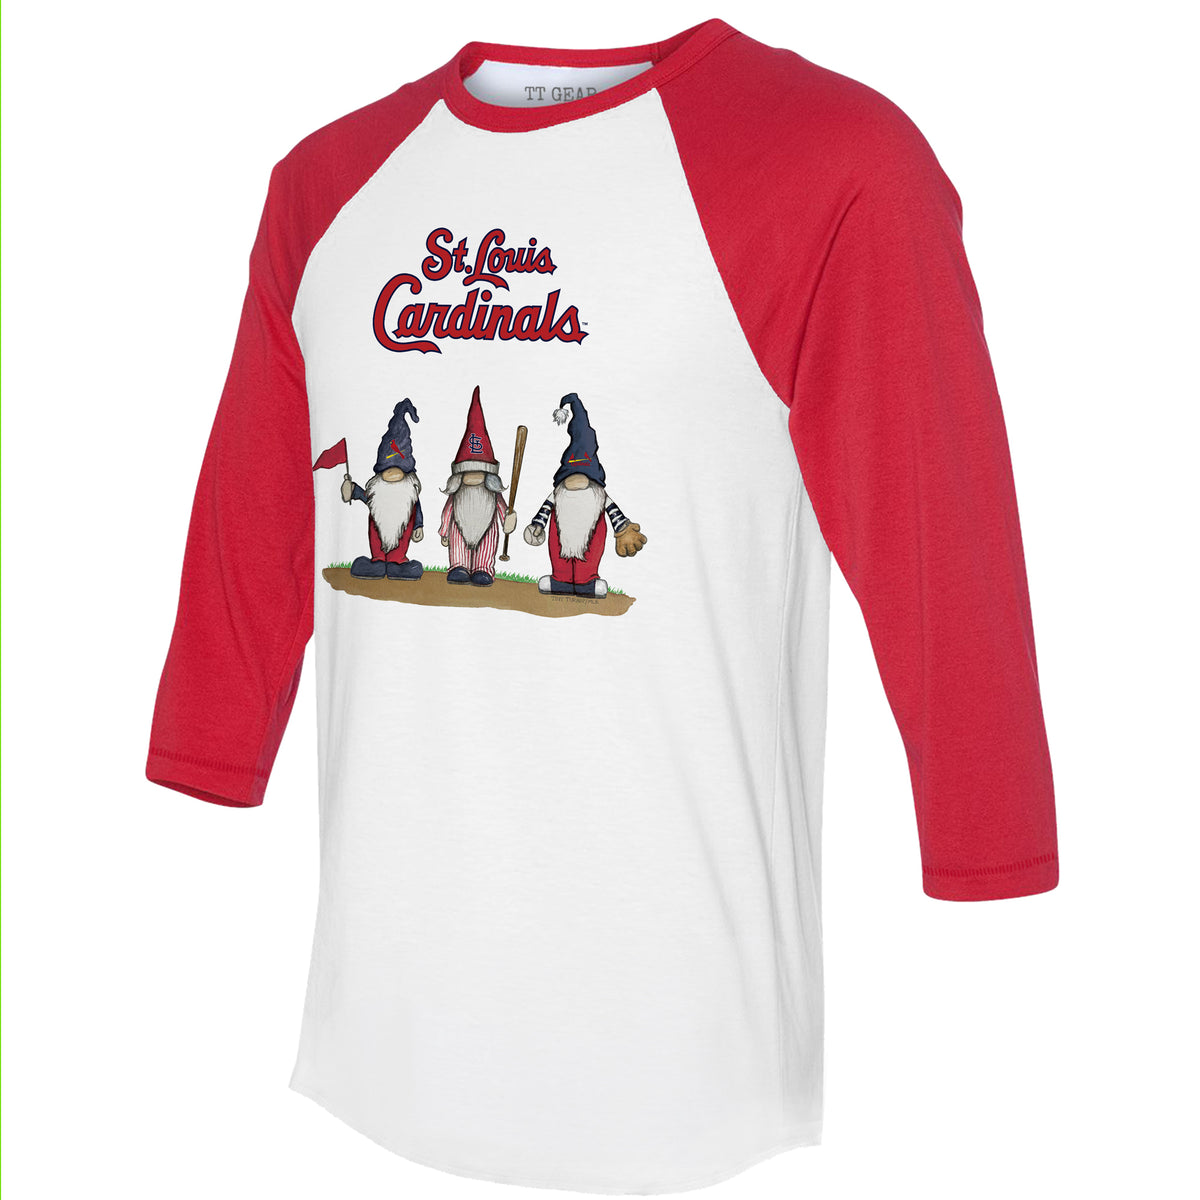 St. Louis Cardinals Gnomes 3/4 Red Sleeve Raglan